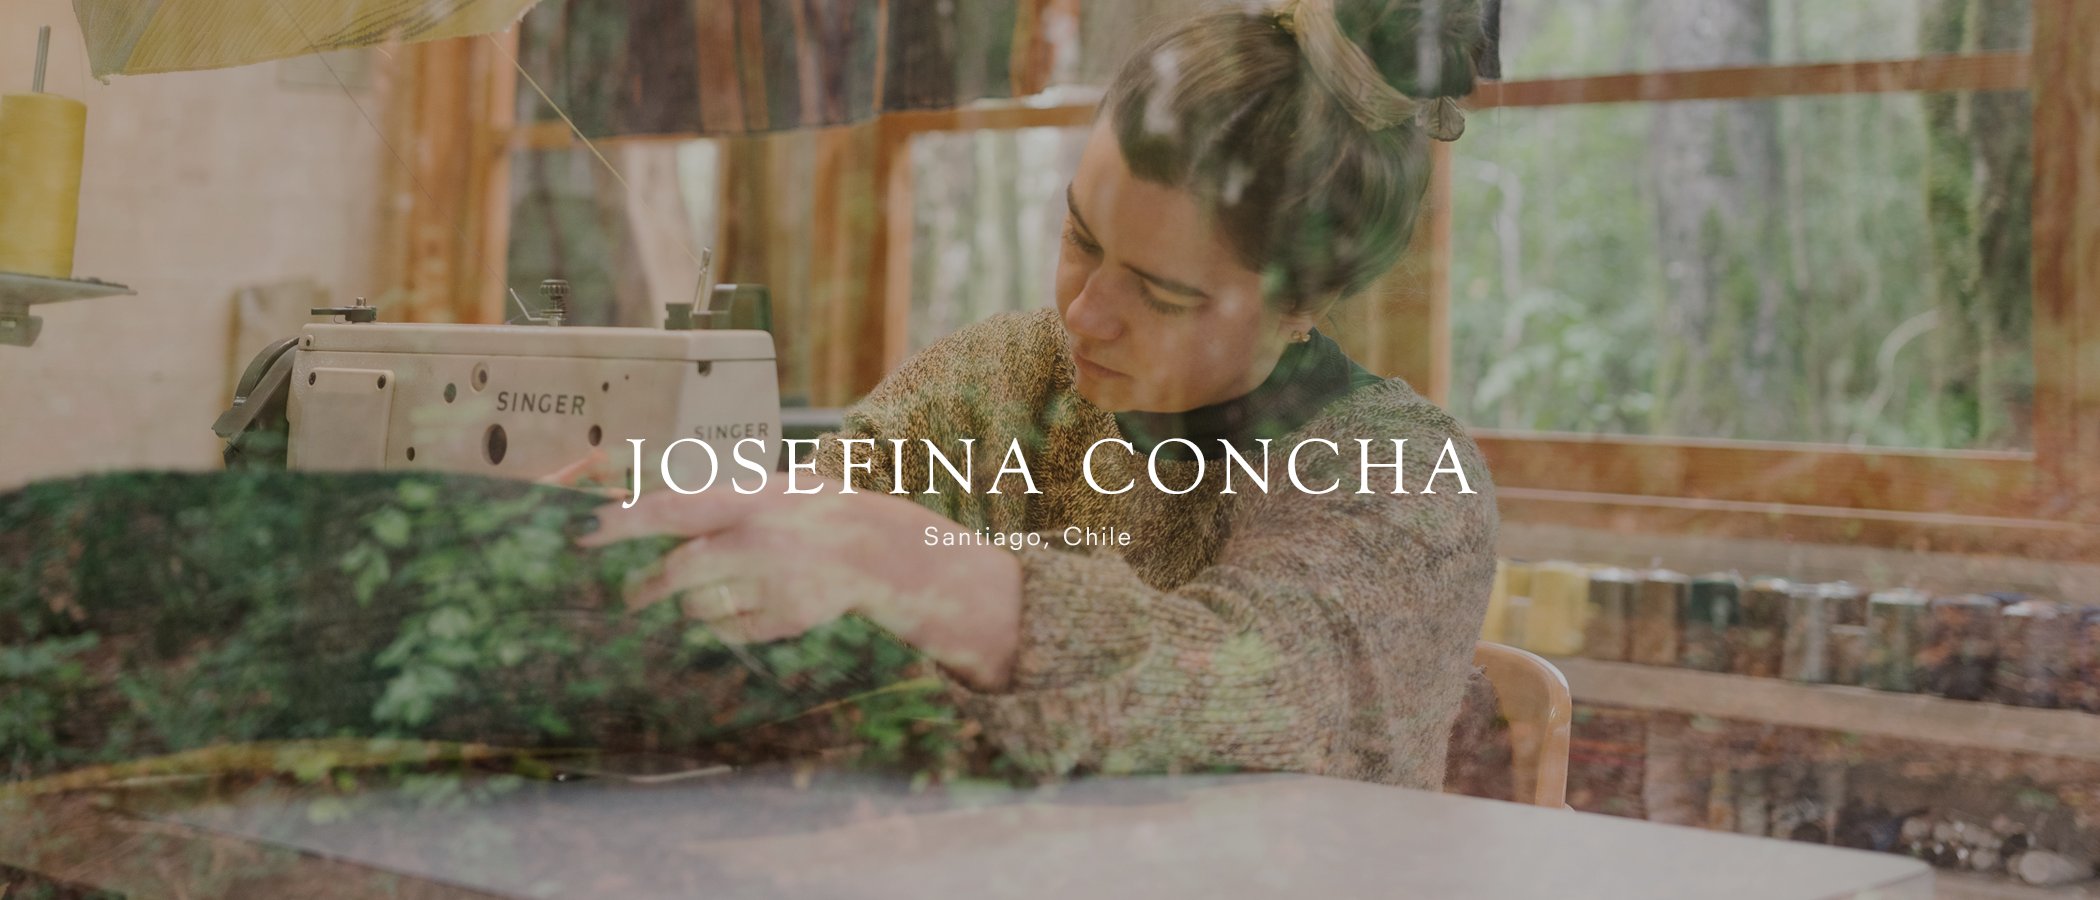 Josefina Concha